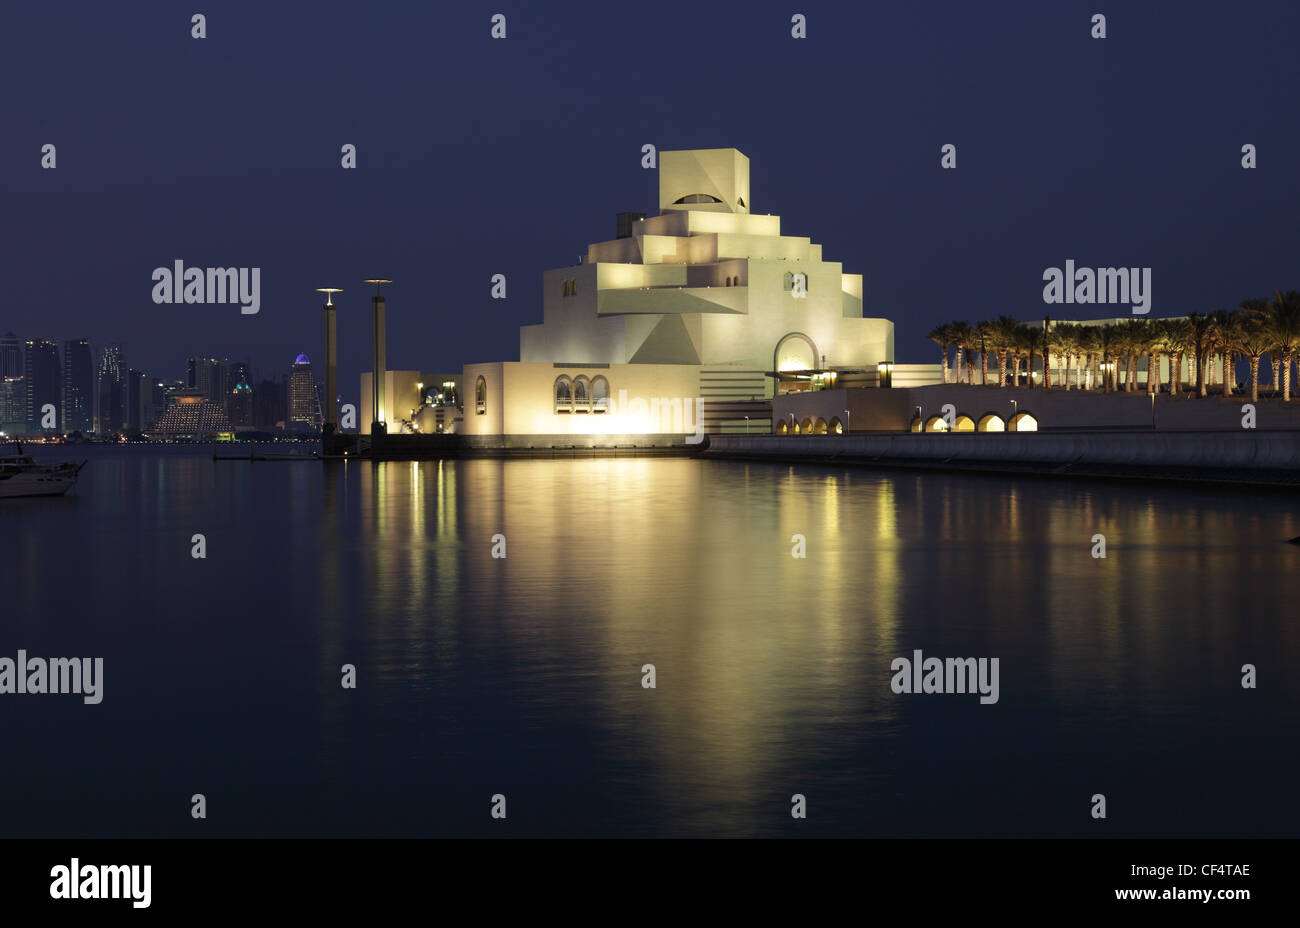 Museum of Islamic Art in Doha illuminated at night. Qatar, Middle East Stock Photo